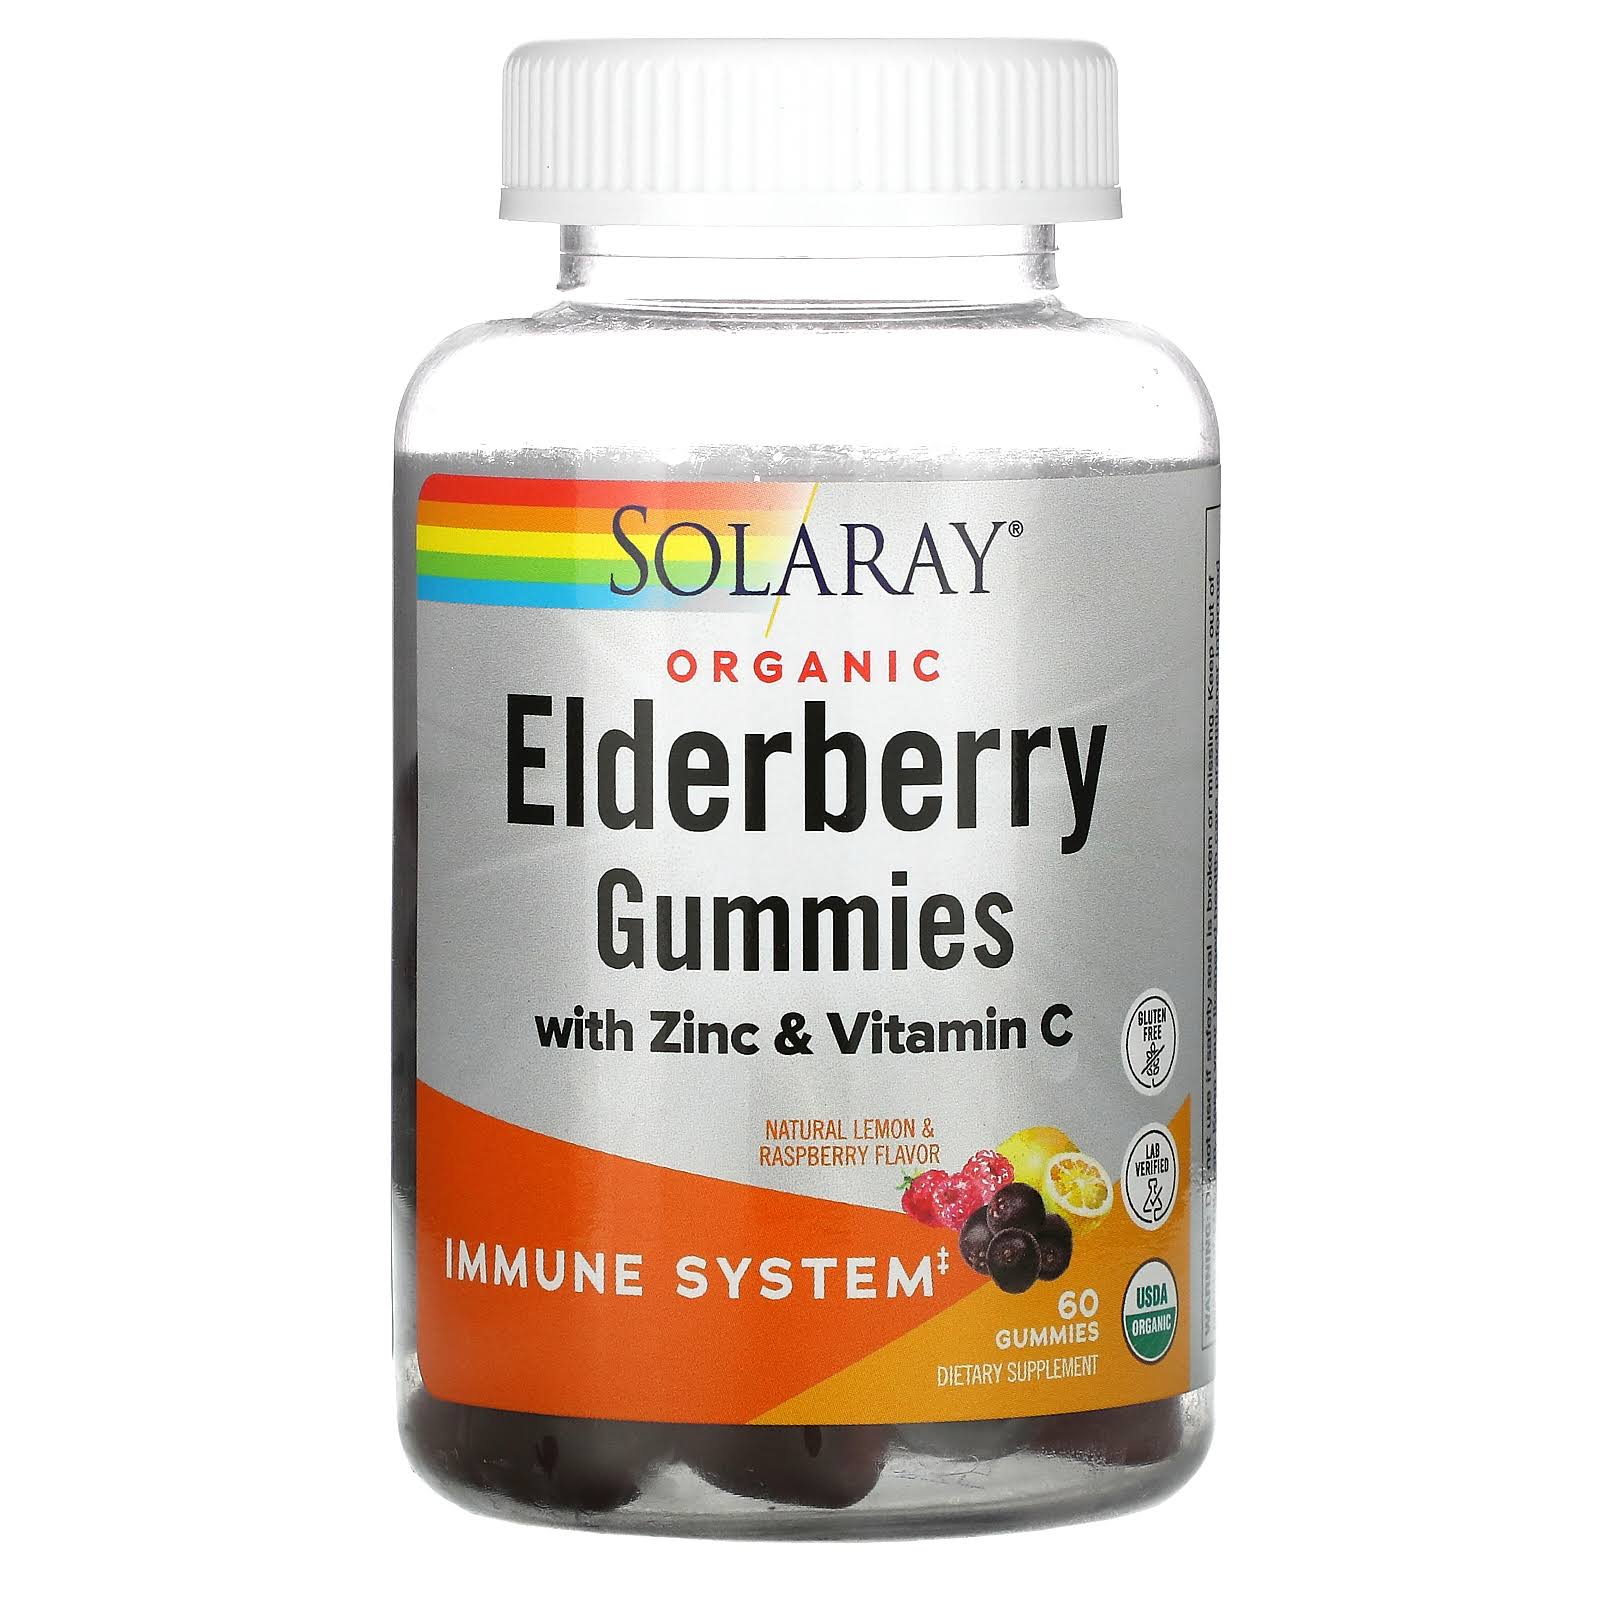 Solaray Organic Elderberry Gummies with Zinc & Vitamin C Natural Lemon & Raspberry 60 Gummies